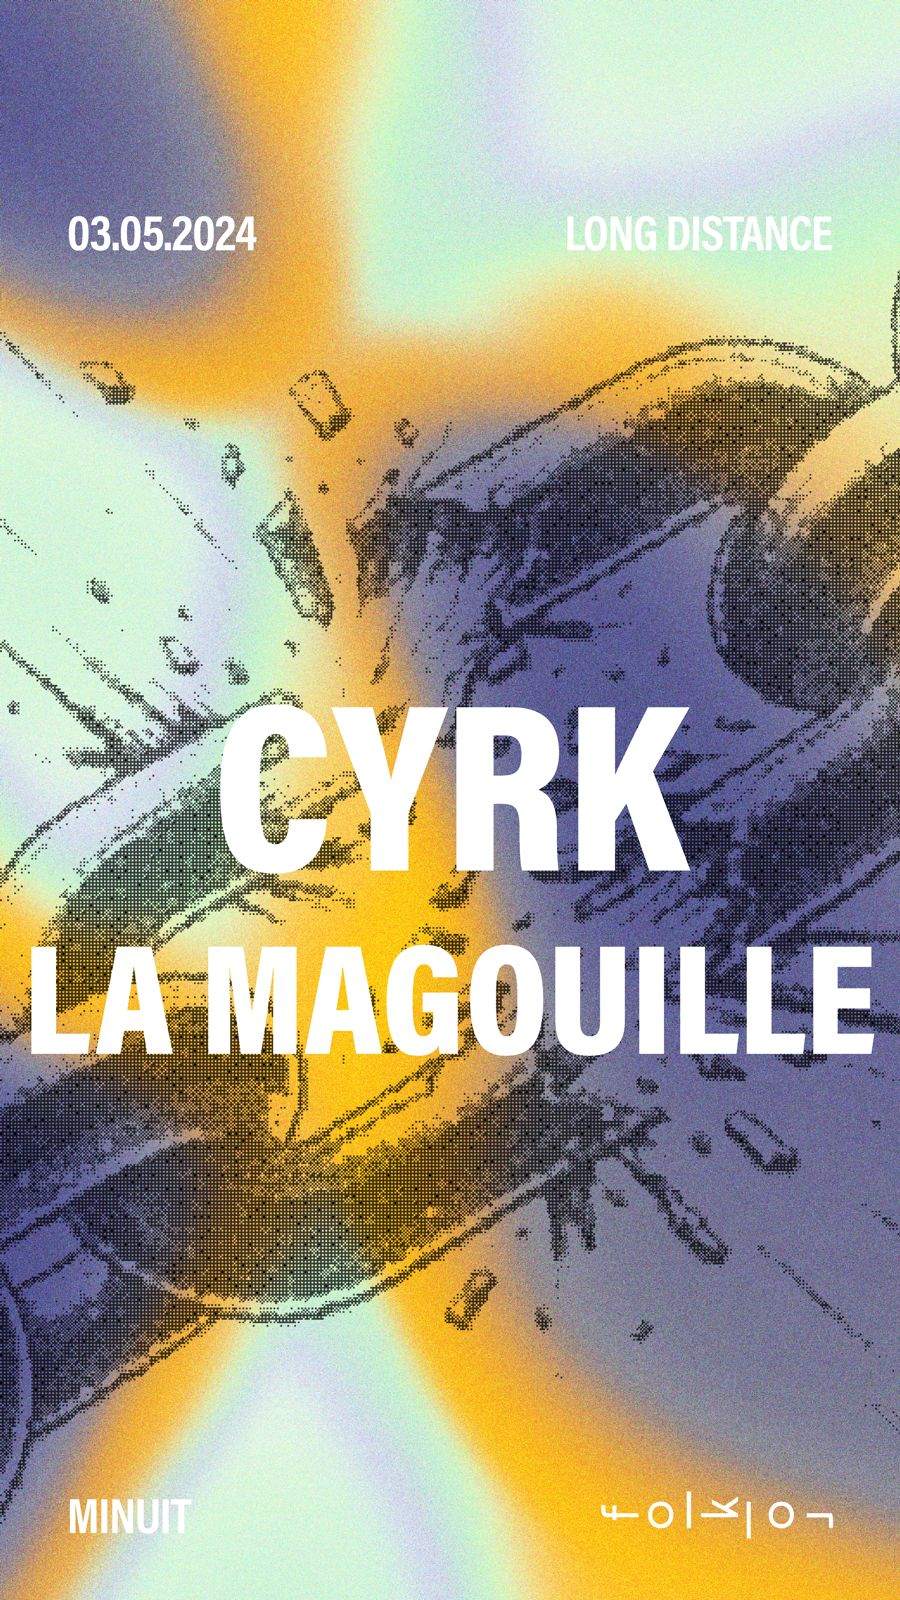 Long Distance /// CYRK - La Magouille - フライヤー表